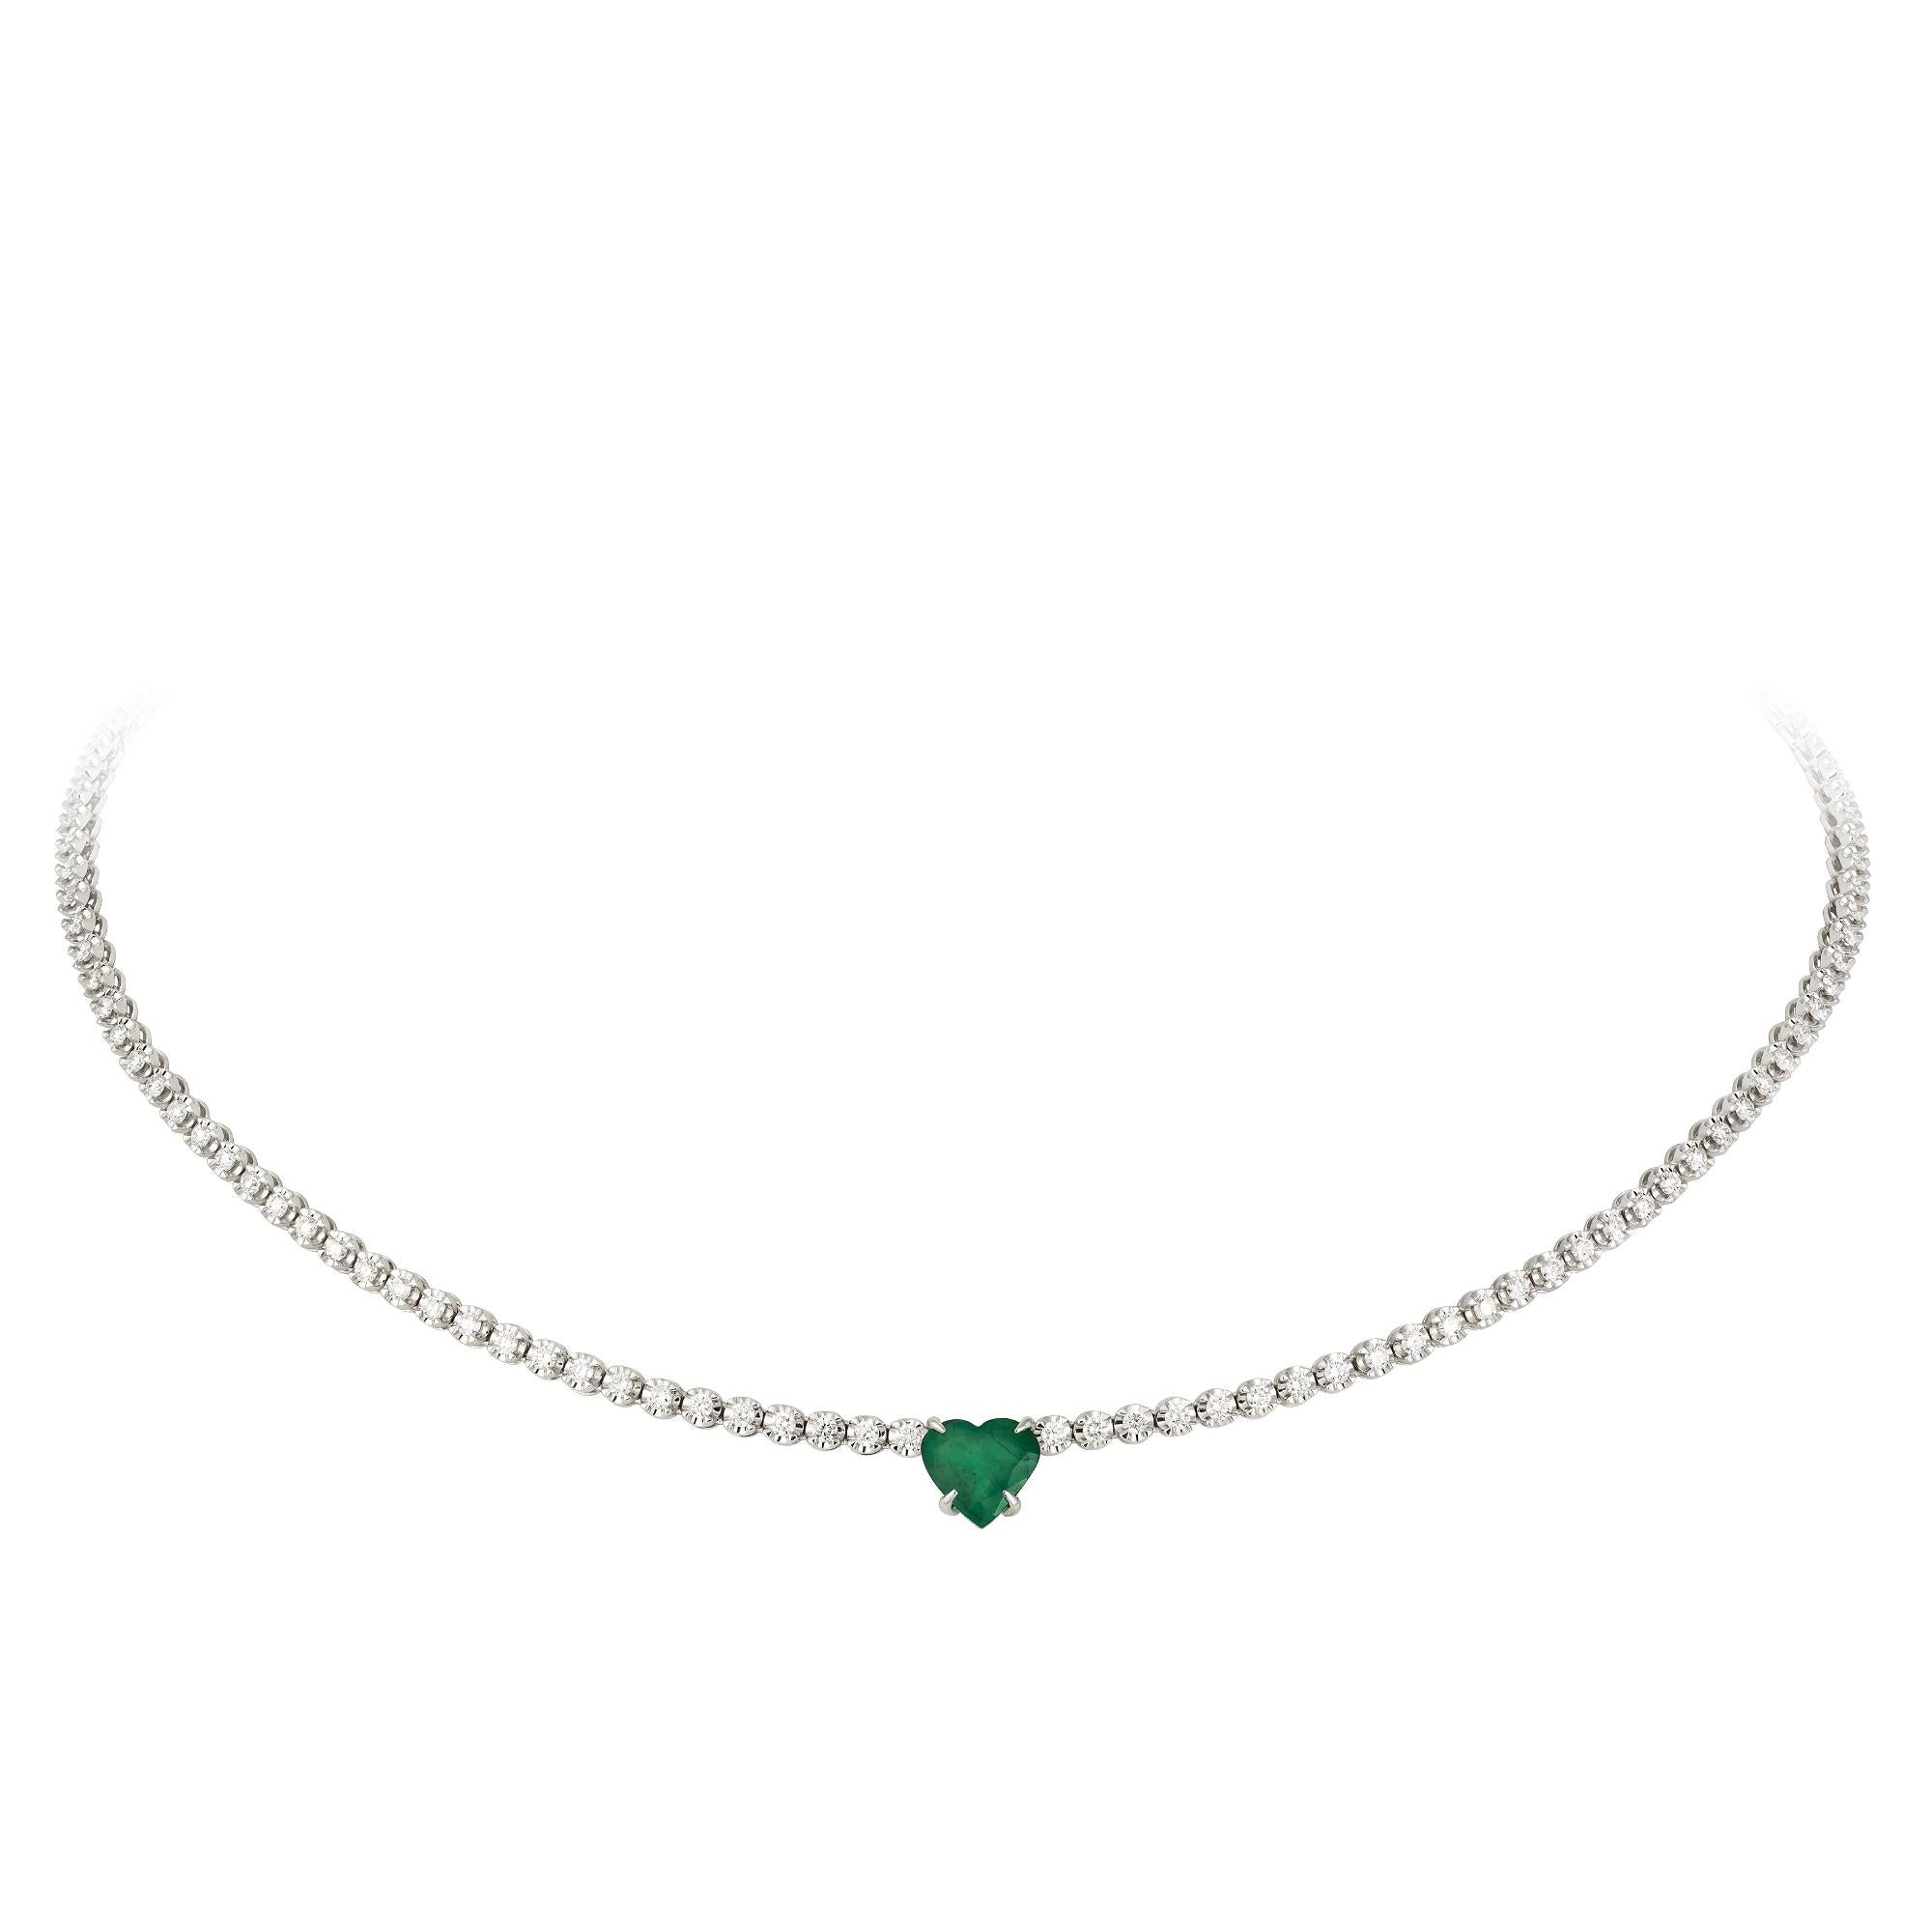 Emerald Cut Unique Emerald Diamond 18 Karat White Gold Necklace for Her For Sale